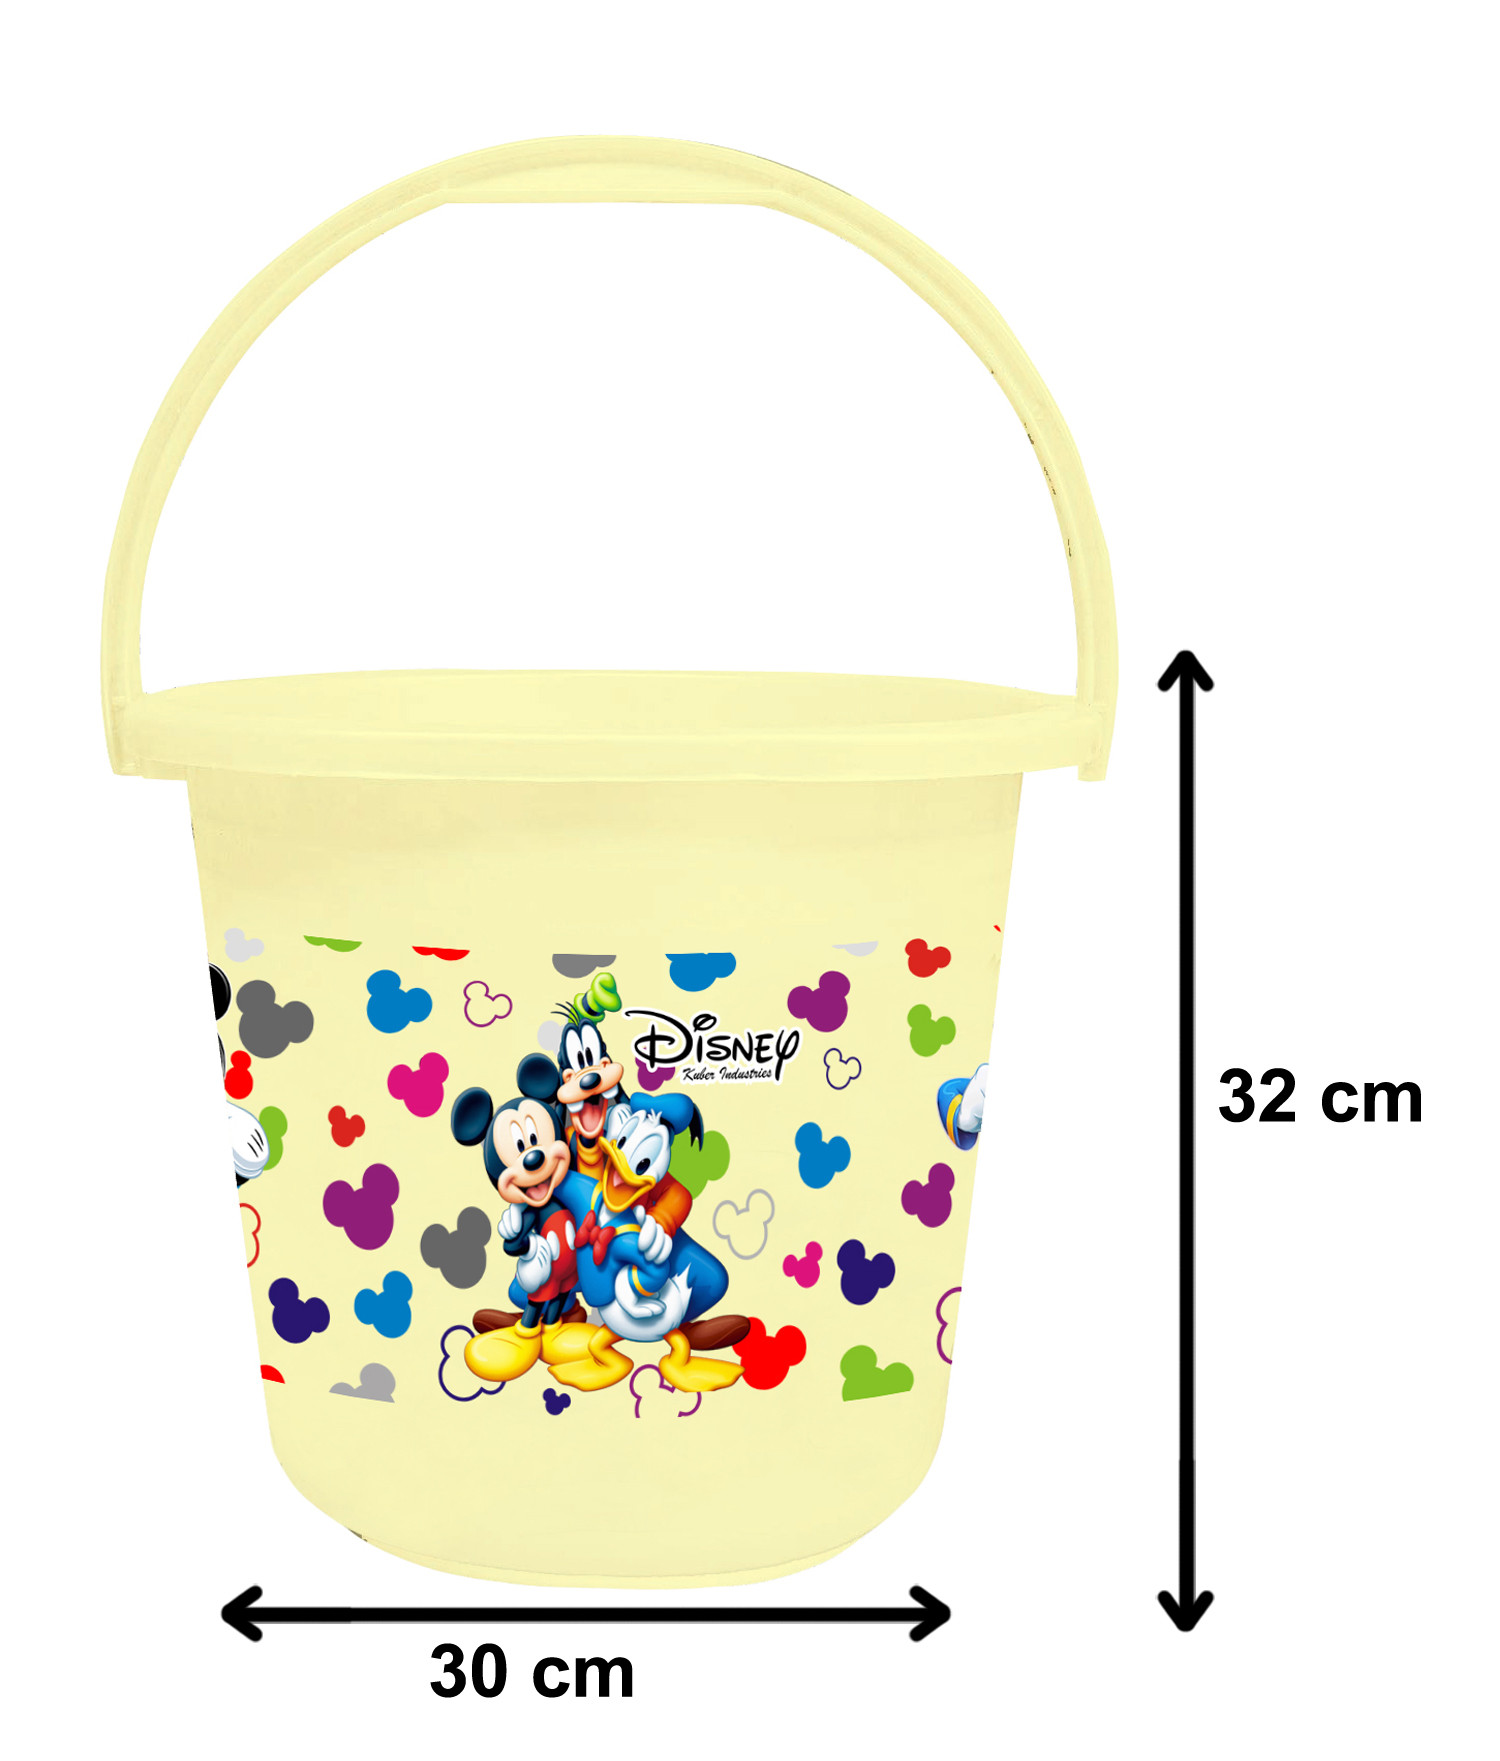 Kuber Industries Disney Team Mickey Print Unbreakable Virgin Plastic Strong Bathroom Bucket ,16 LTR (Cream & Blue & White)-Pack of 3 -HS_35_KUBMART17435